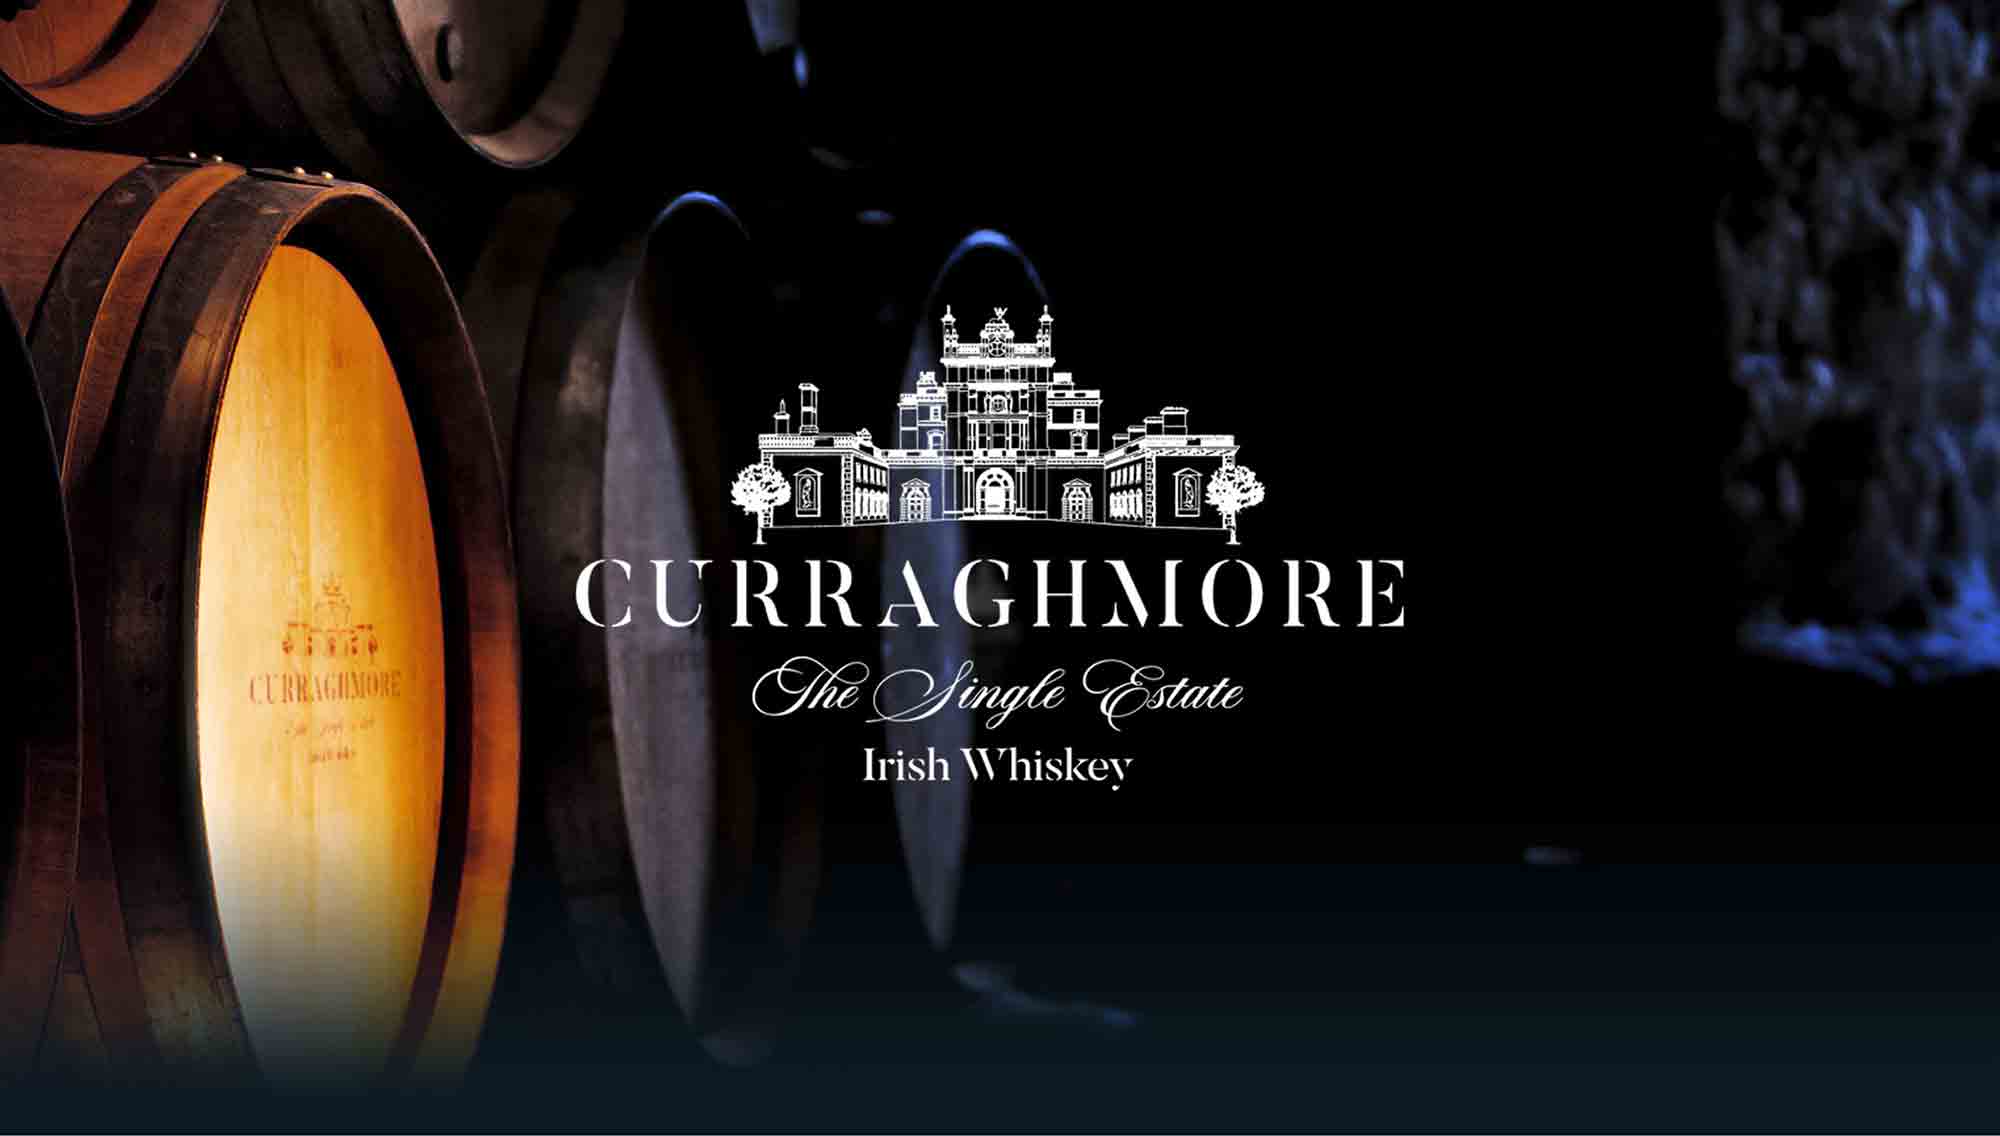 The single estate Irish Whiskey - Currahgmore Whiskey